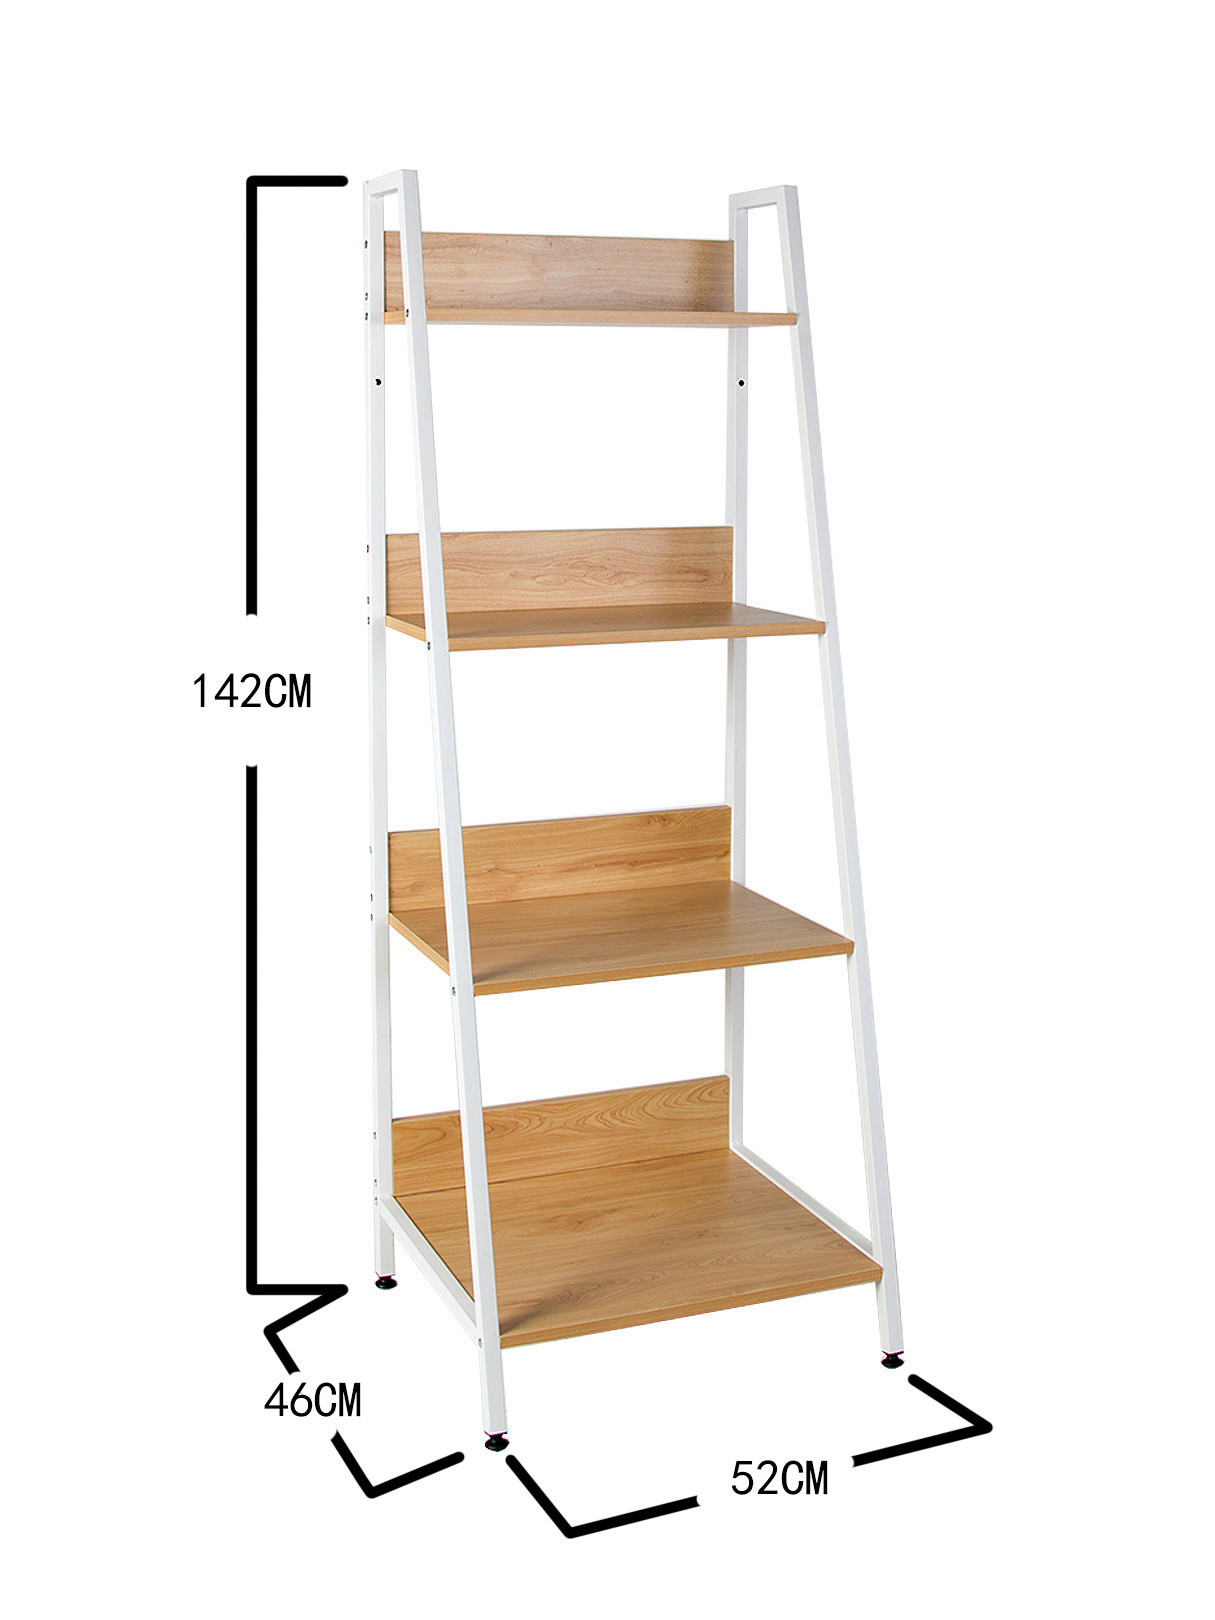 size of ladder shelf 